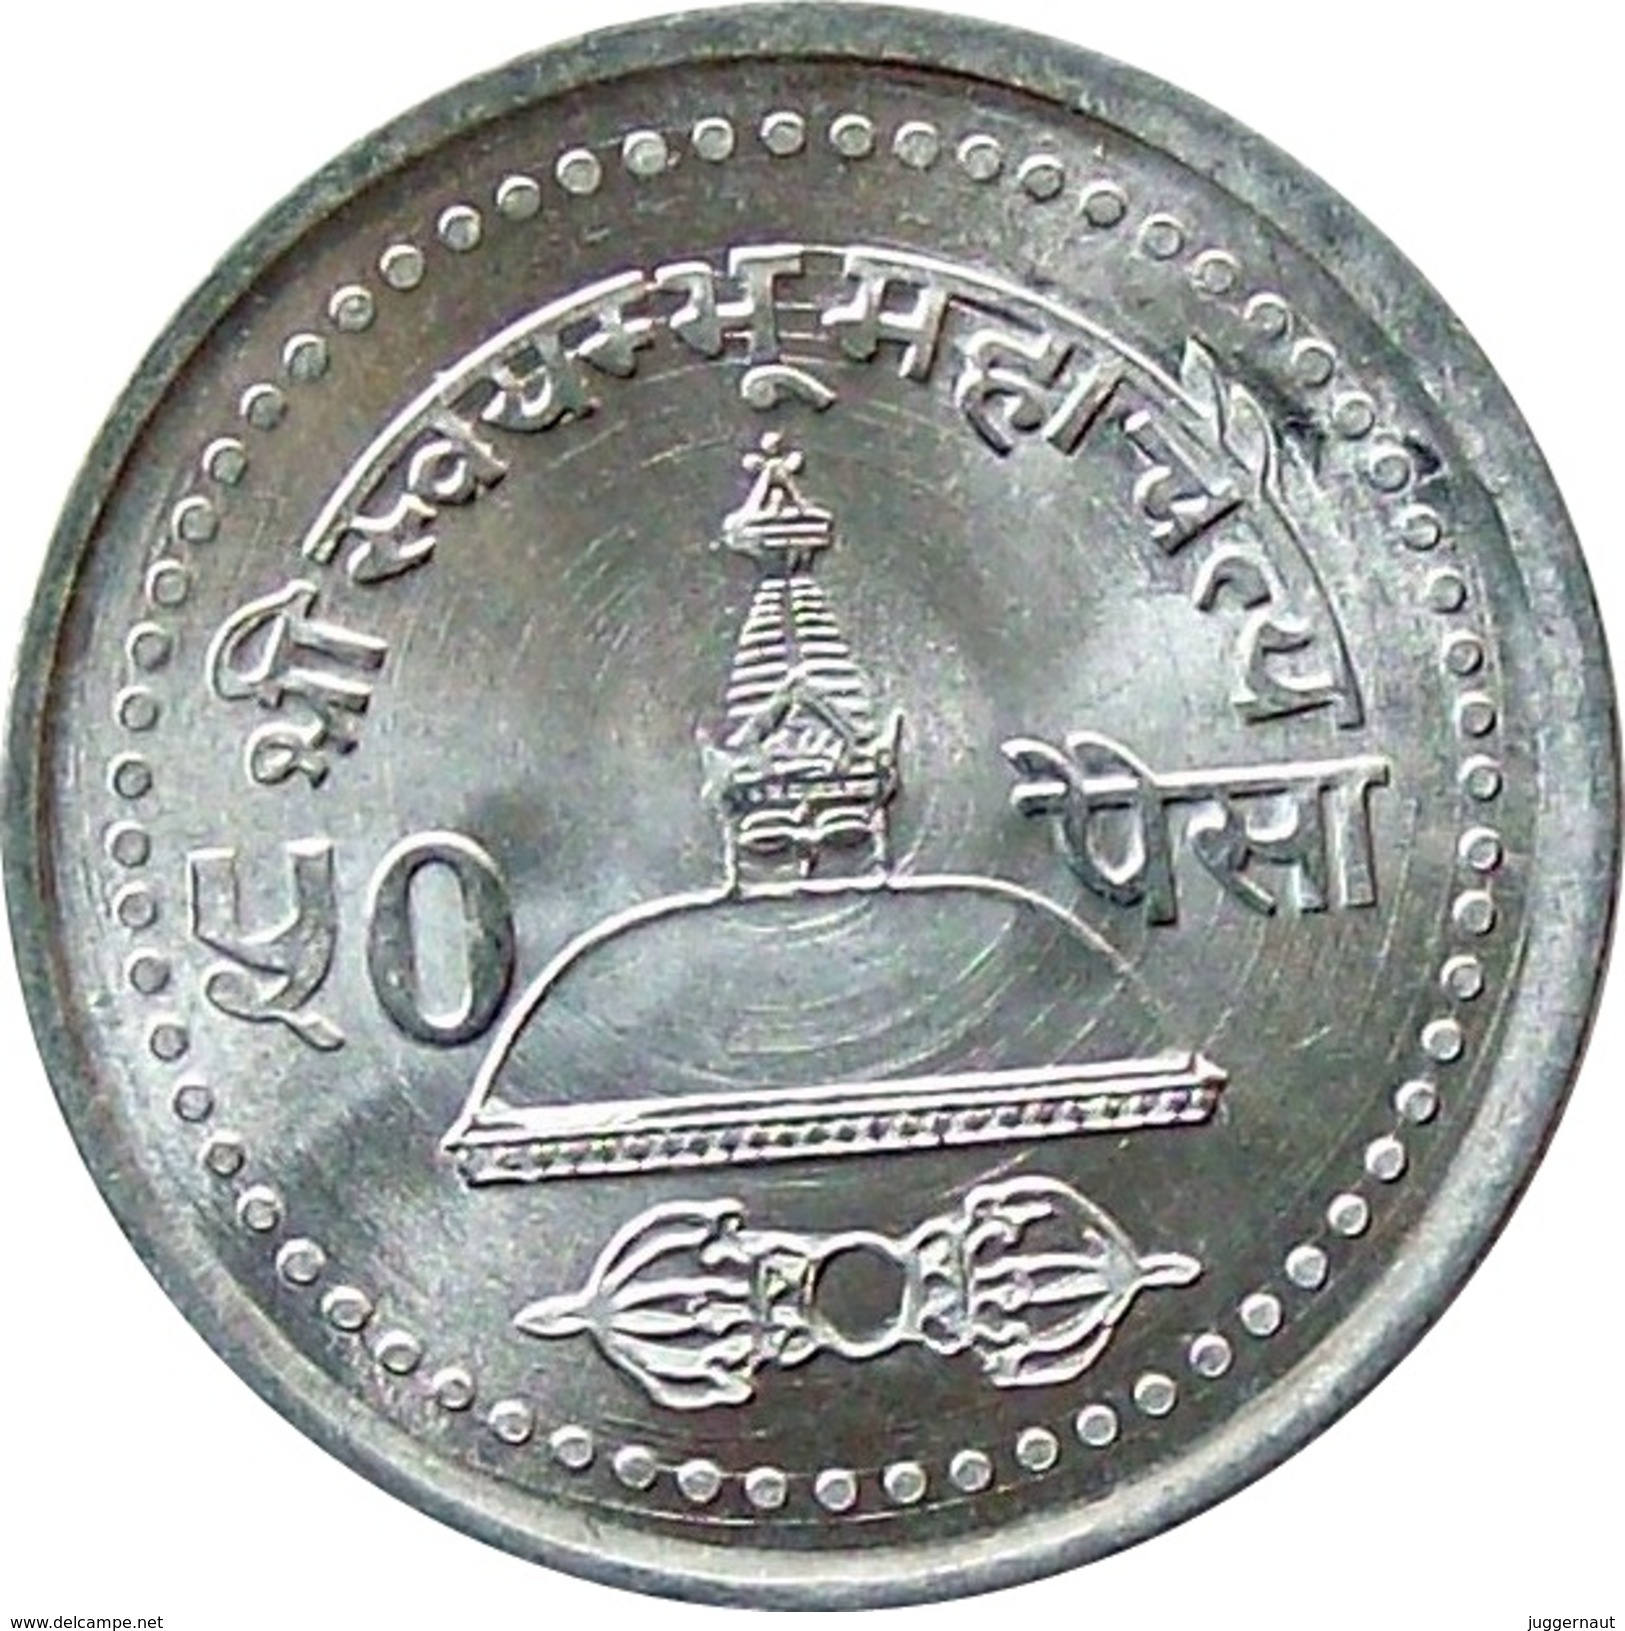 NEPAL 50 PAISA SWAYAMBHUNATH TEMPLE ALUMINUM COIN NEPAL 2004 KM-1179 UNCIRCULATED UNC - Nepal